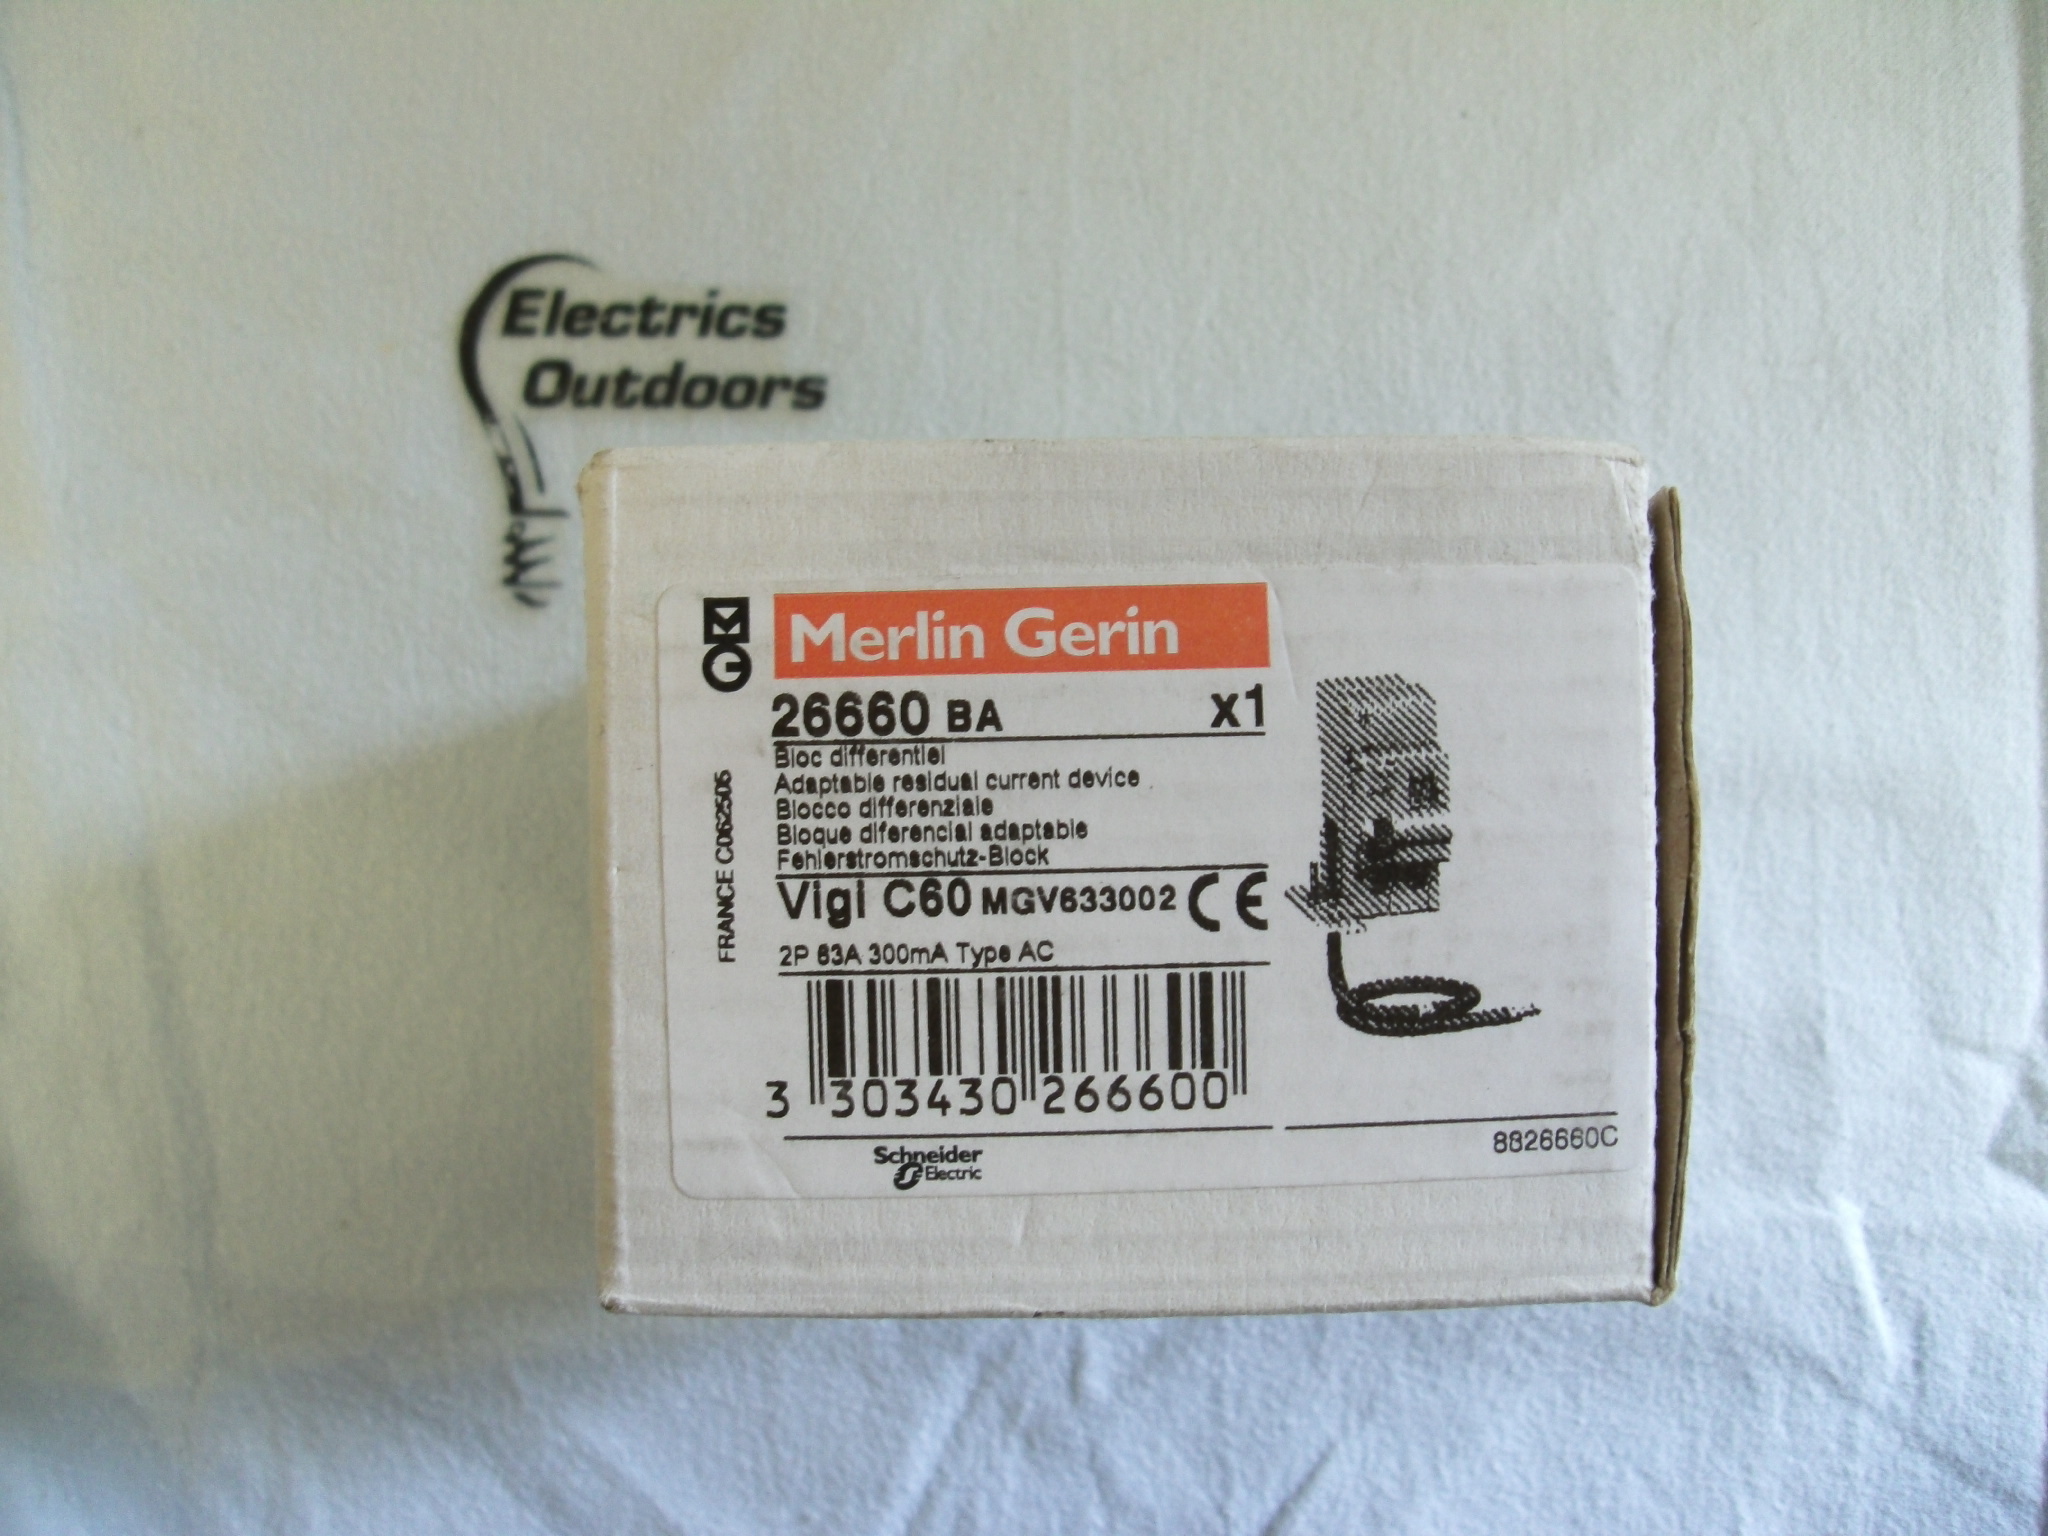 MERLIN GERIN 63 AMP 300mA ADAPTABLE RESIDUAL DEVICE 26660 BA VIGI C60 MGV633002